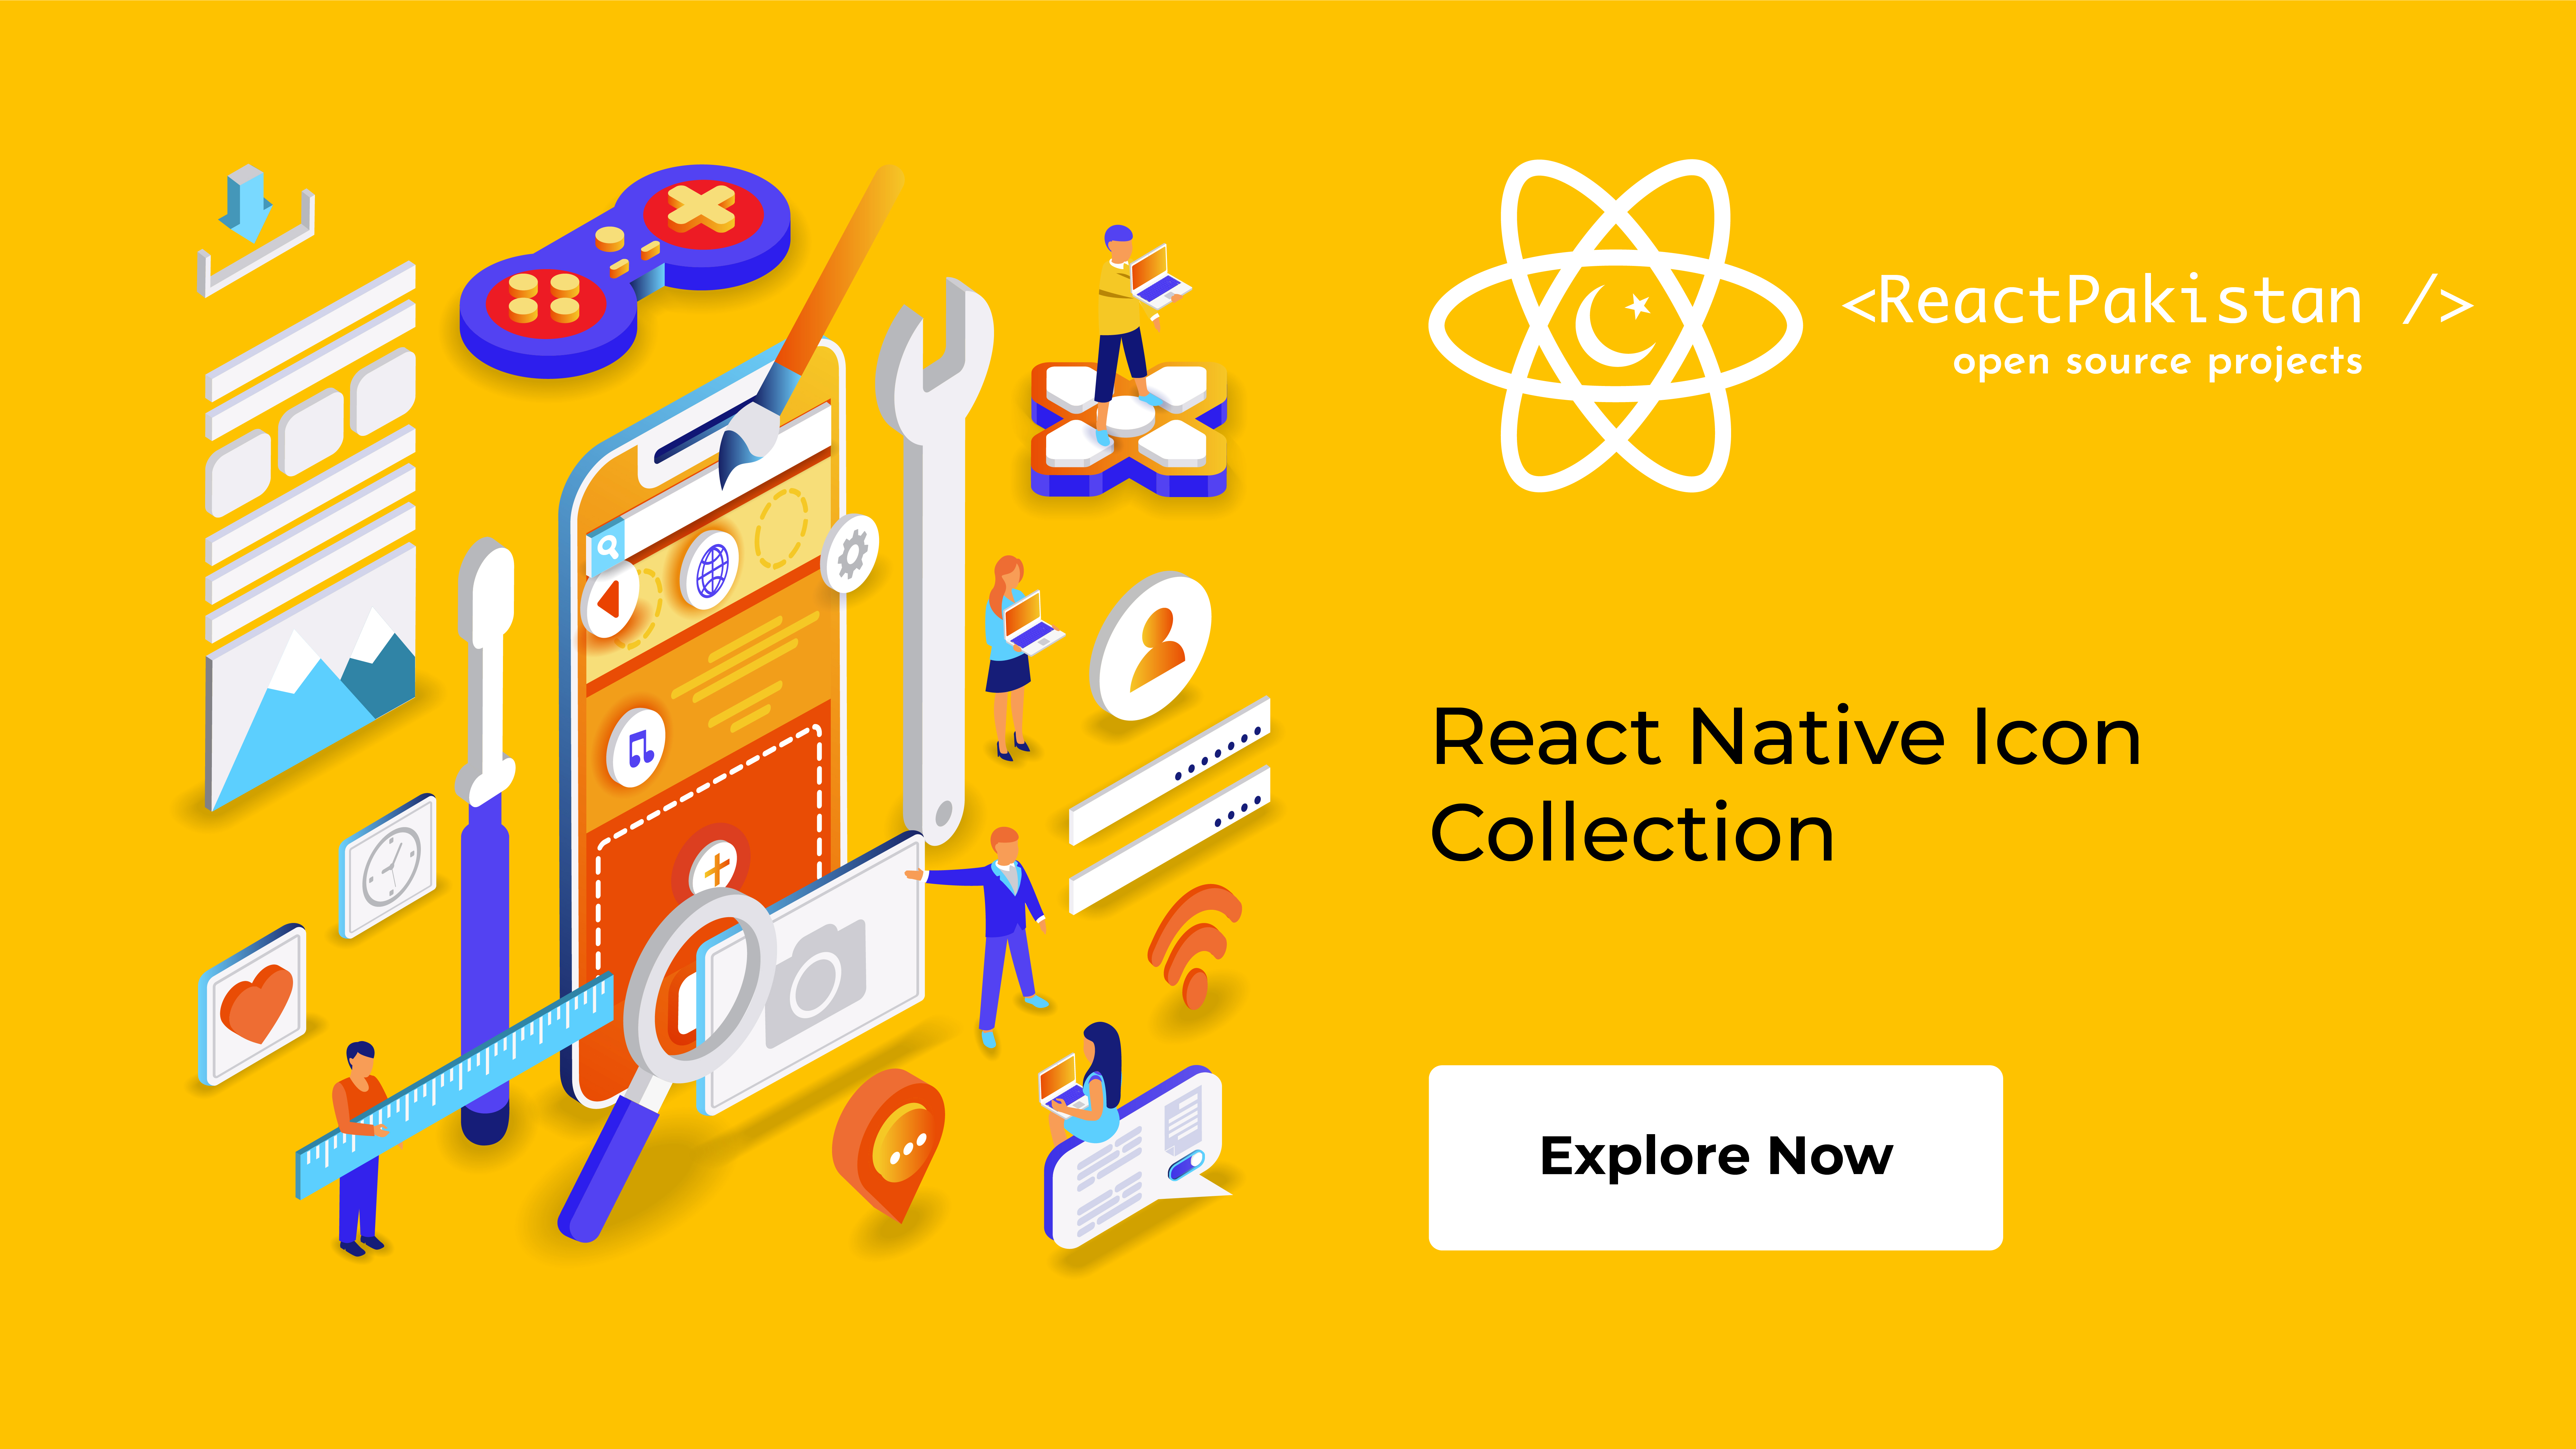 React Pakistan - React Native Icon Collection